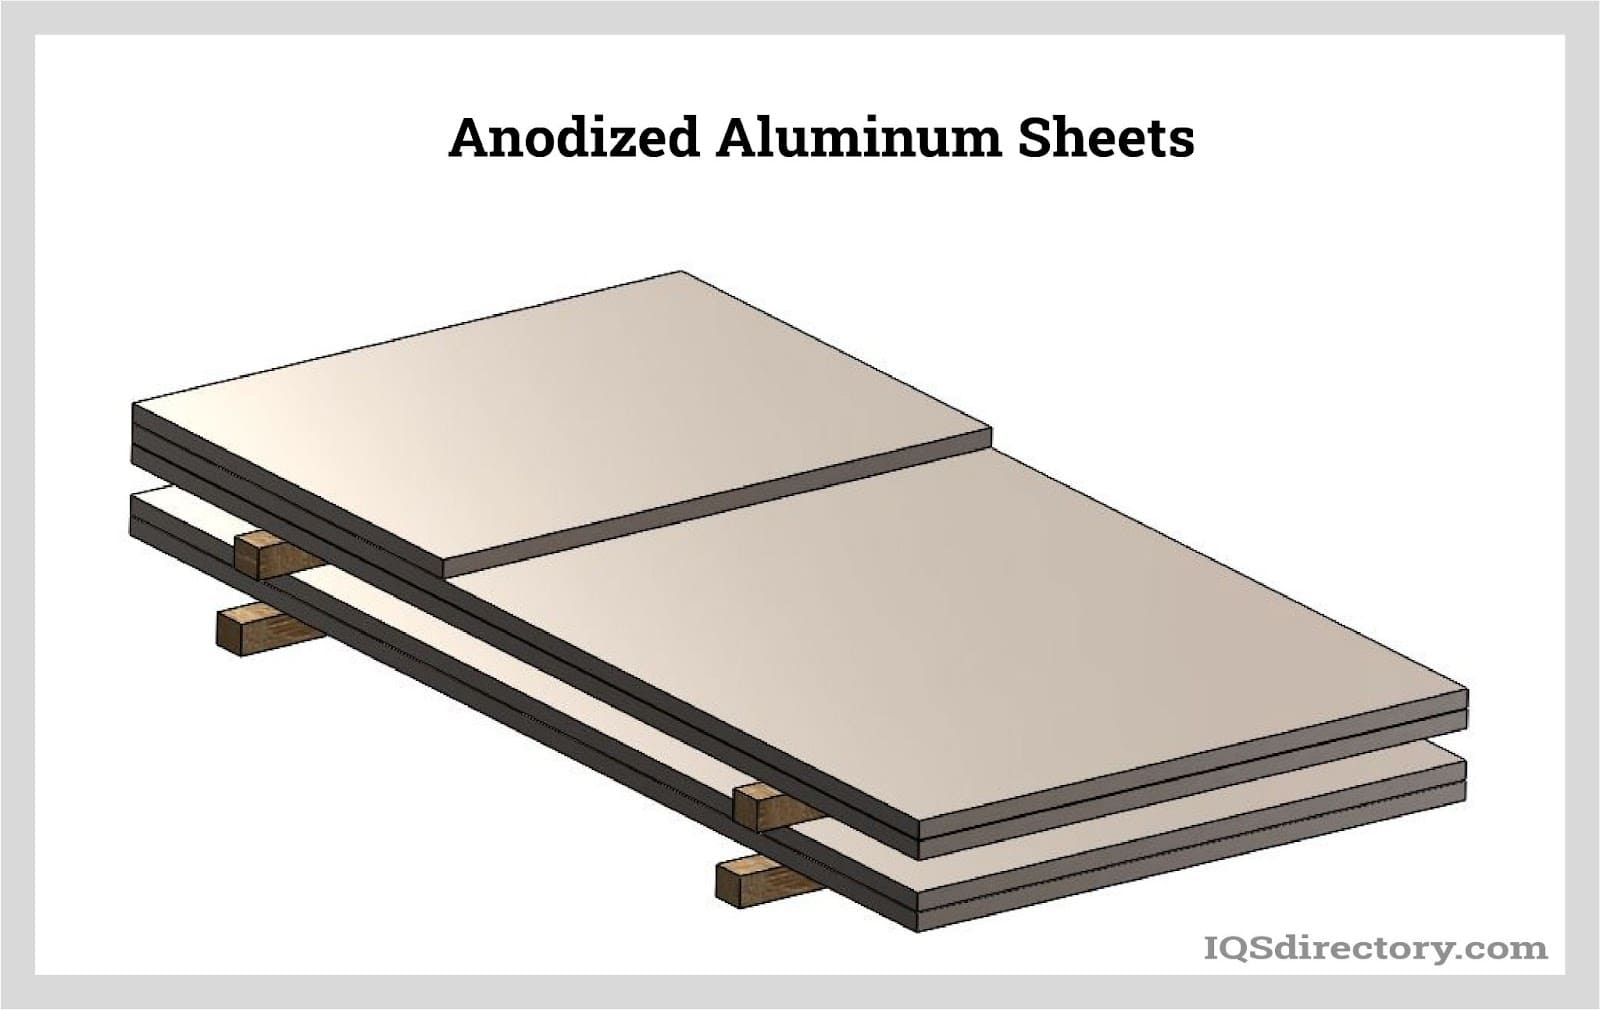 Anodized Aluminum Sheets